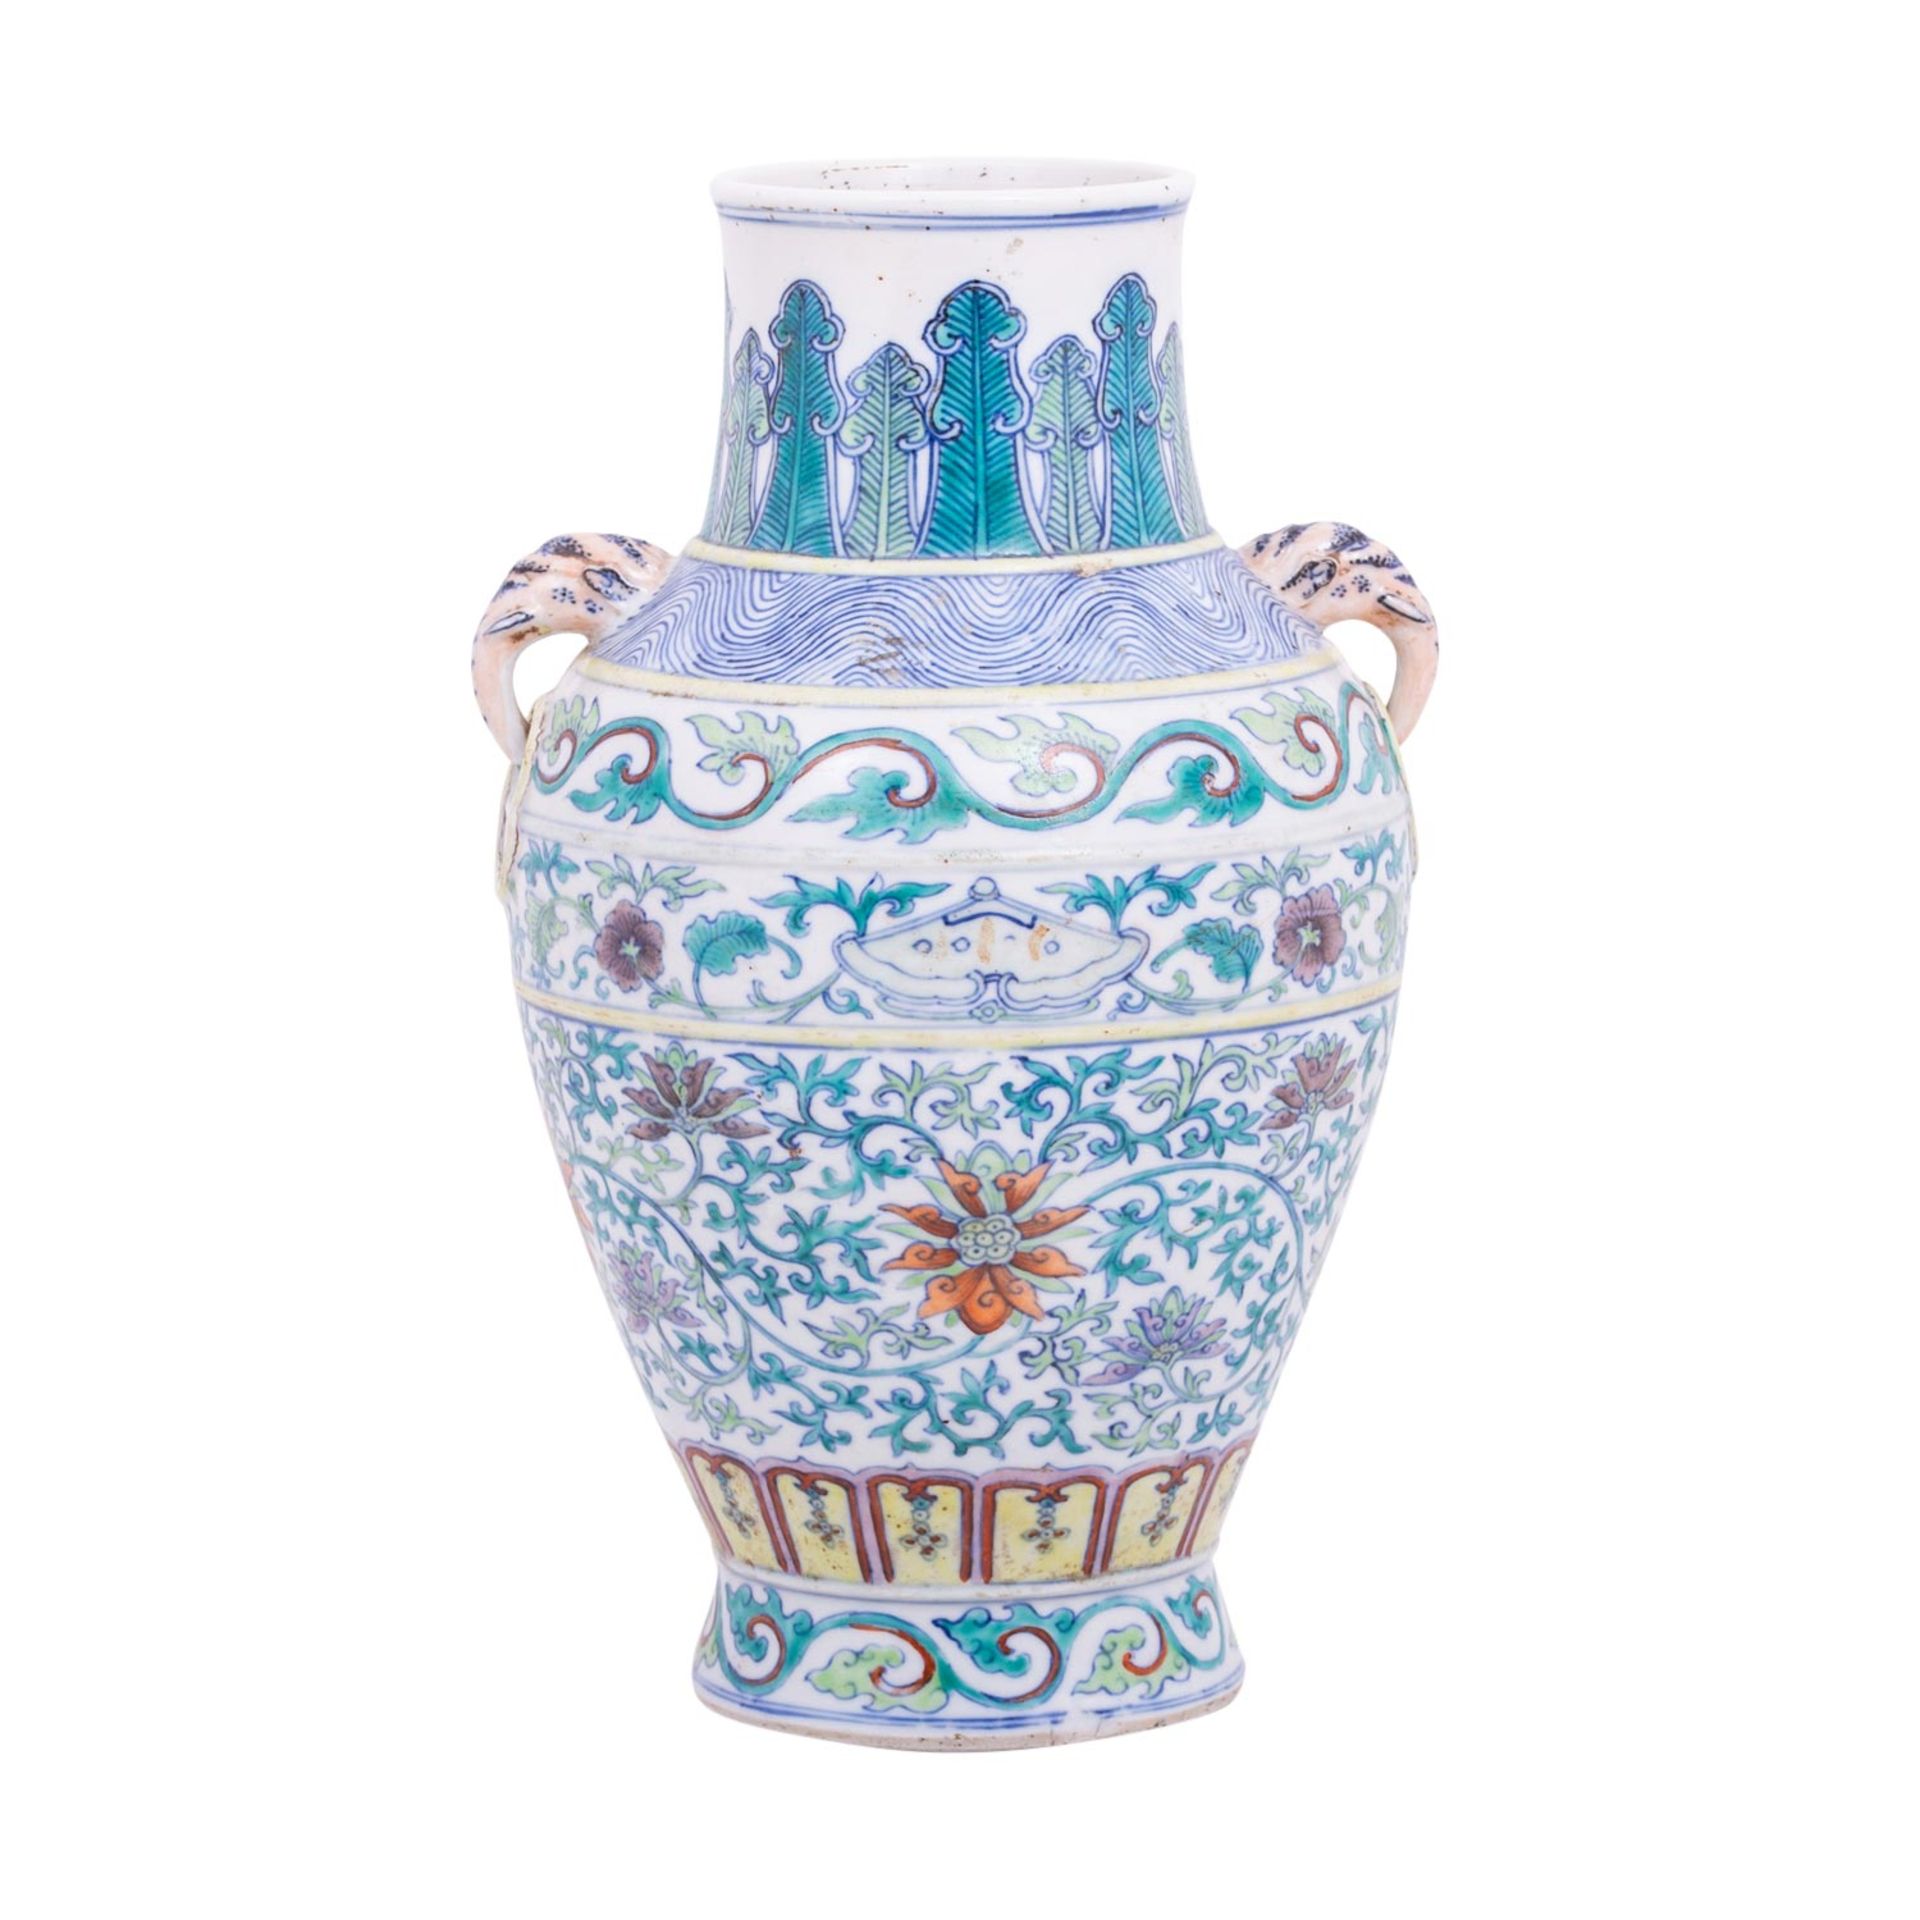 Famille rose-Vase. CHINA, 19. Jh. - Image 3 of 8